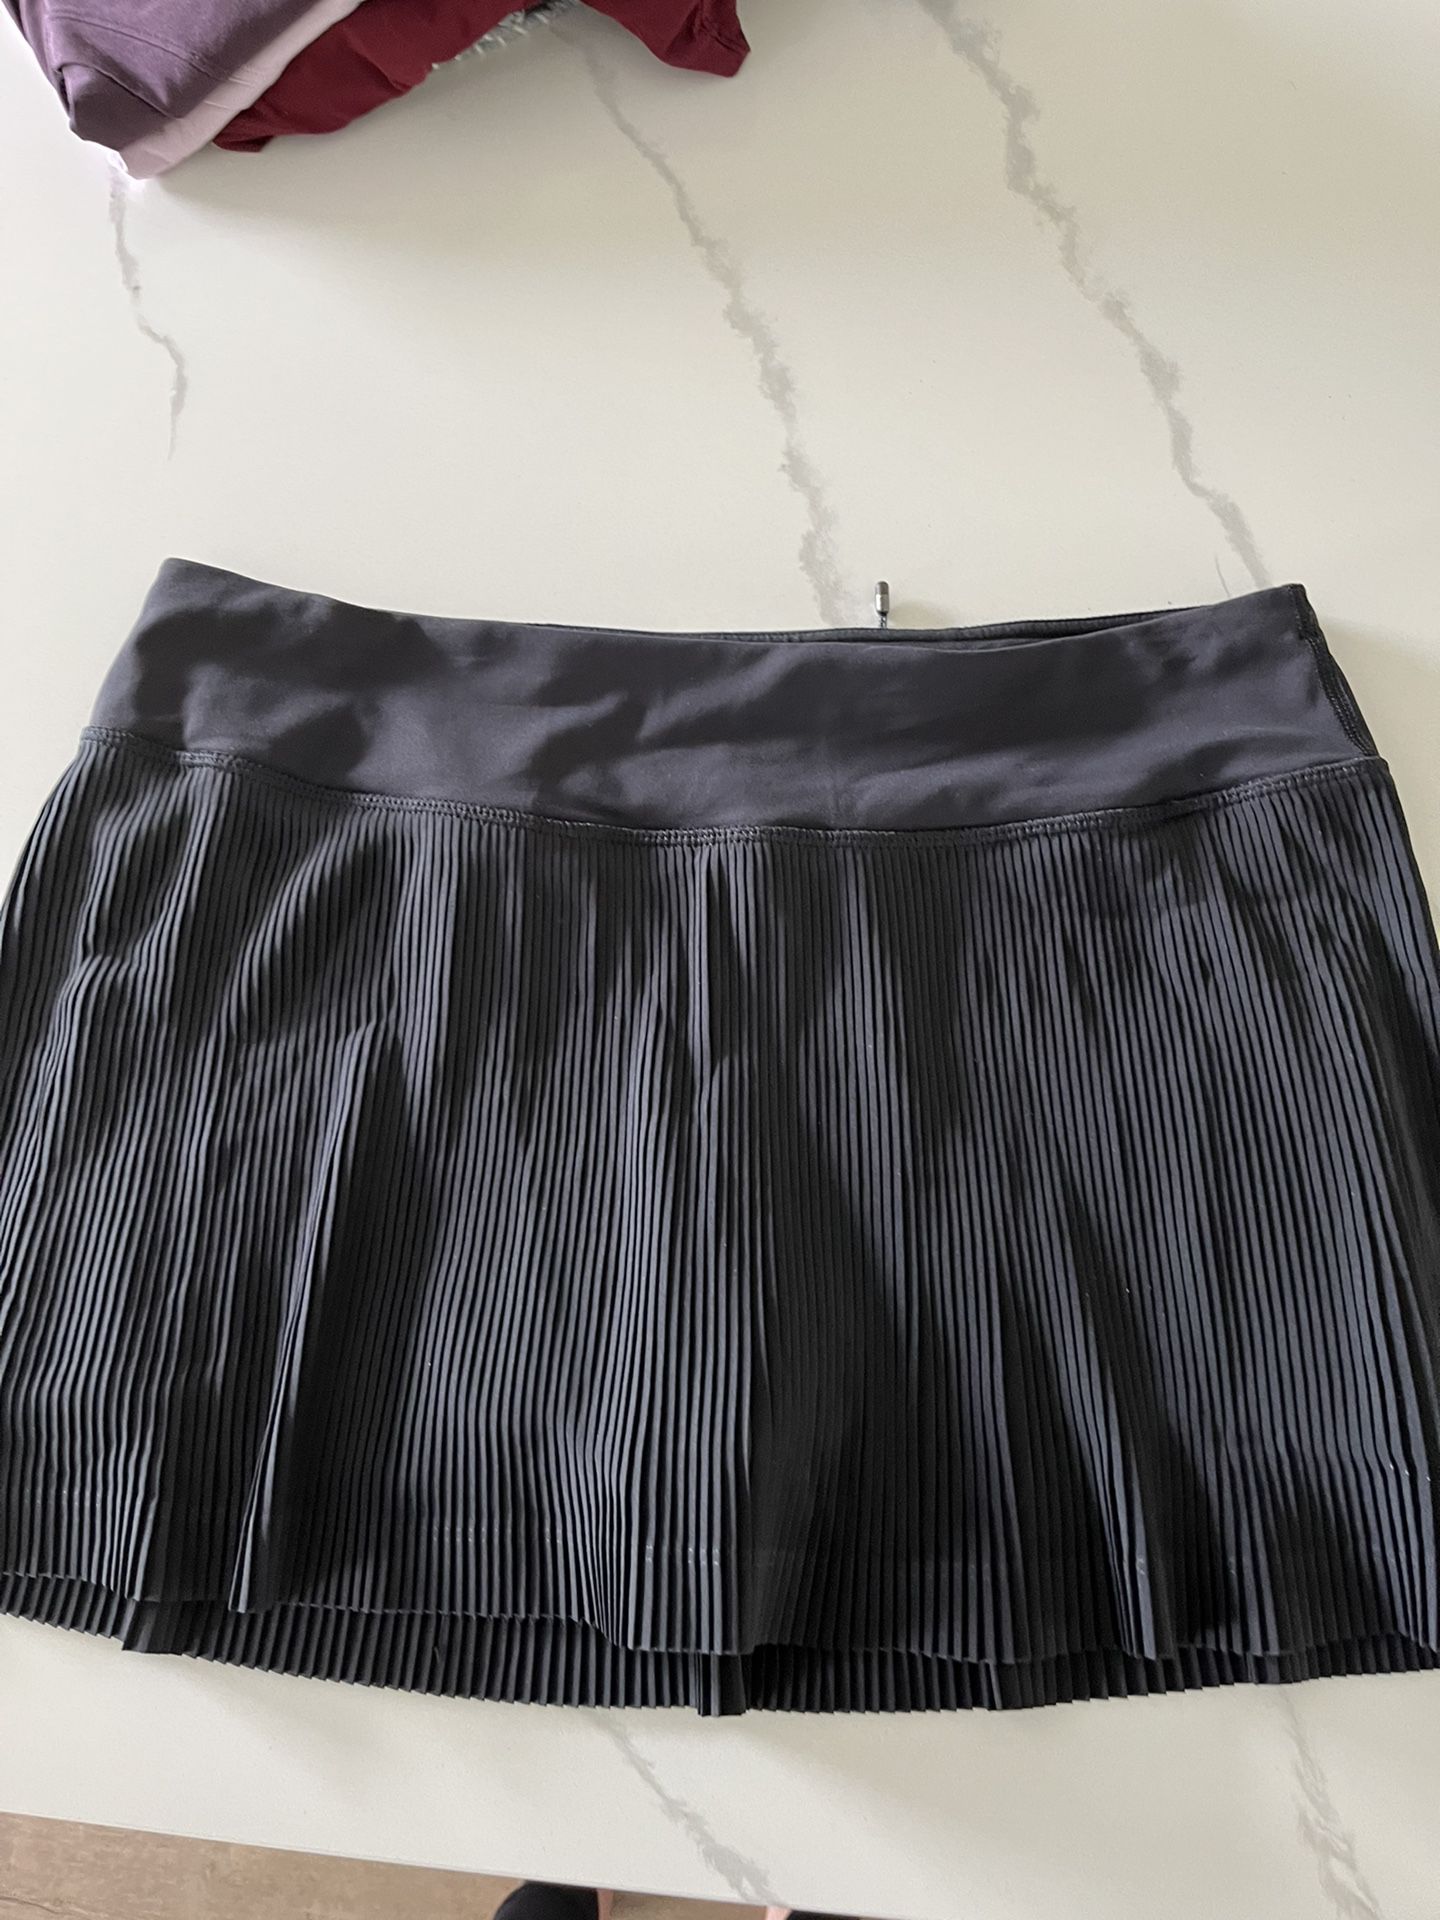 This lululemon skirt 🤌 (Somerset Mall, Michigan) #shorts 